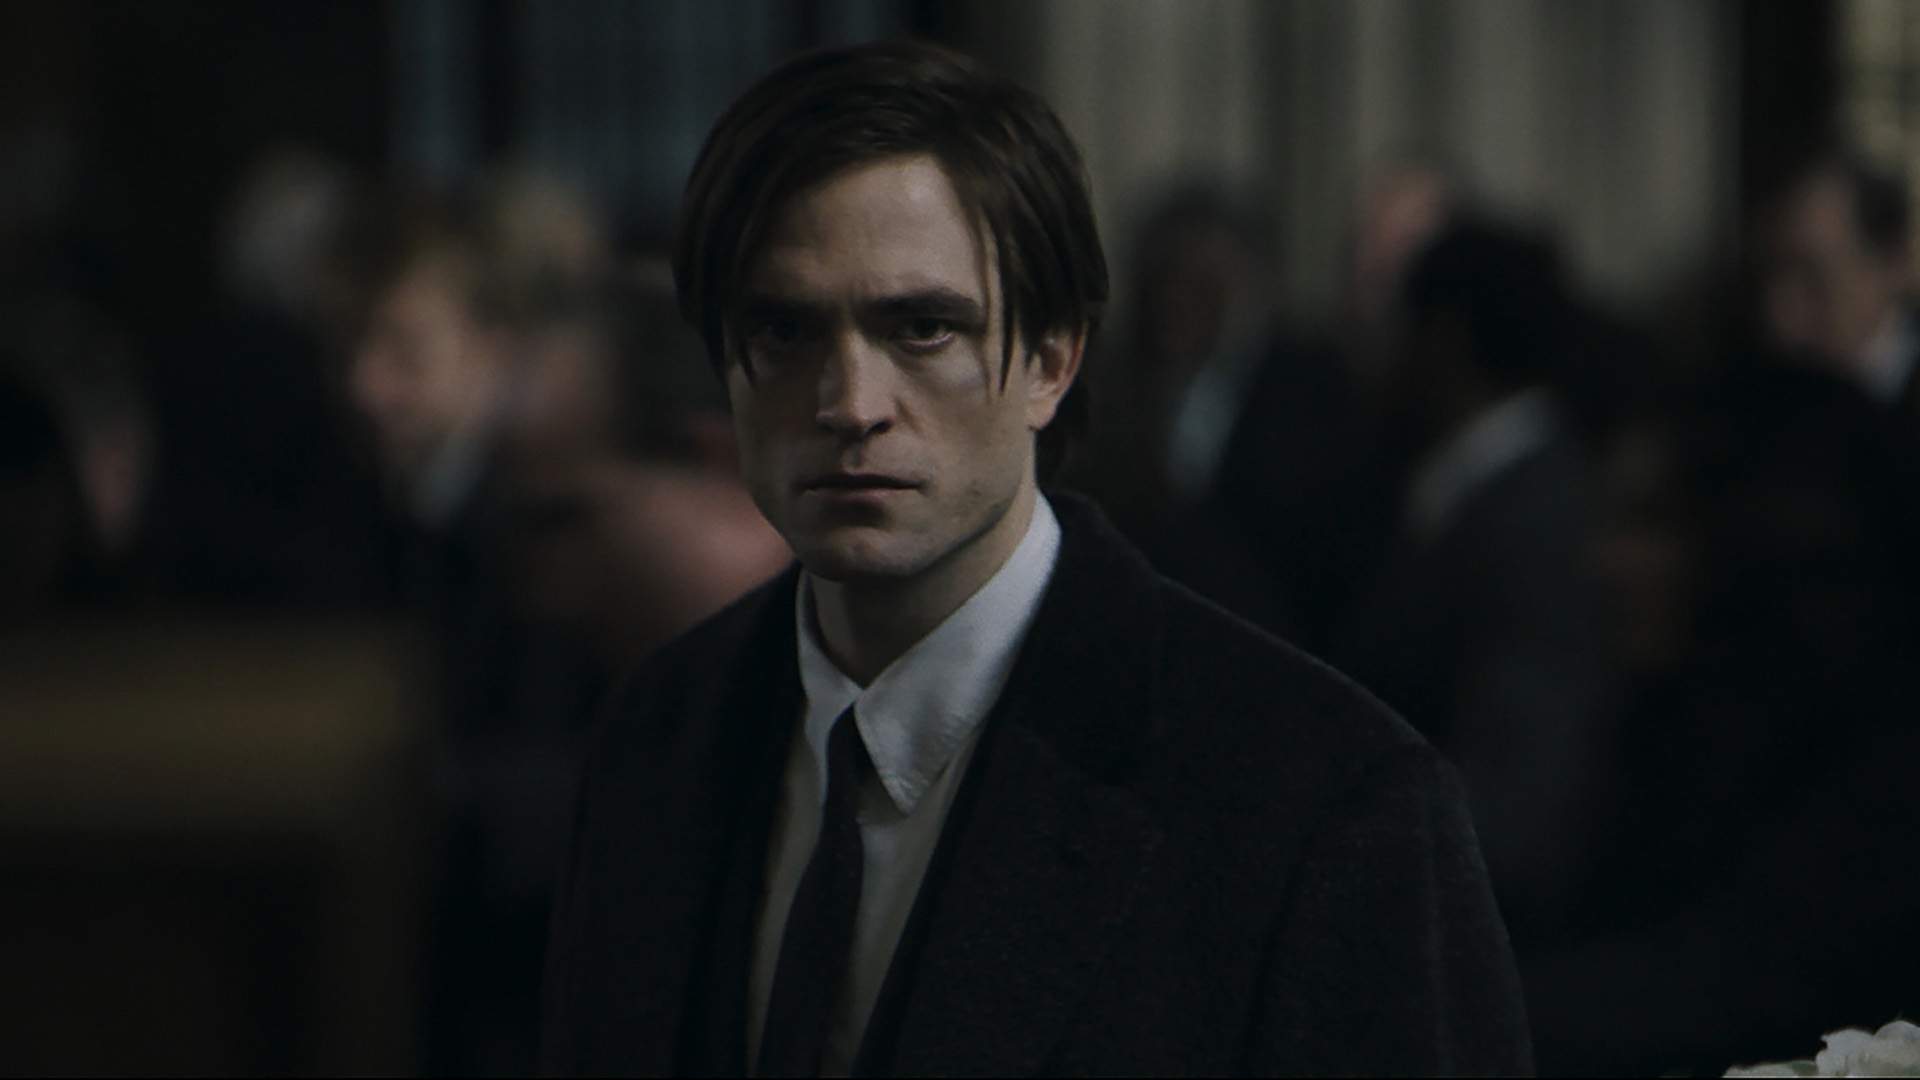 Robert Pattinson Transforms Into the Dark Knight in the Grim and Violent Full Trailer for 'The Batman'